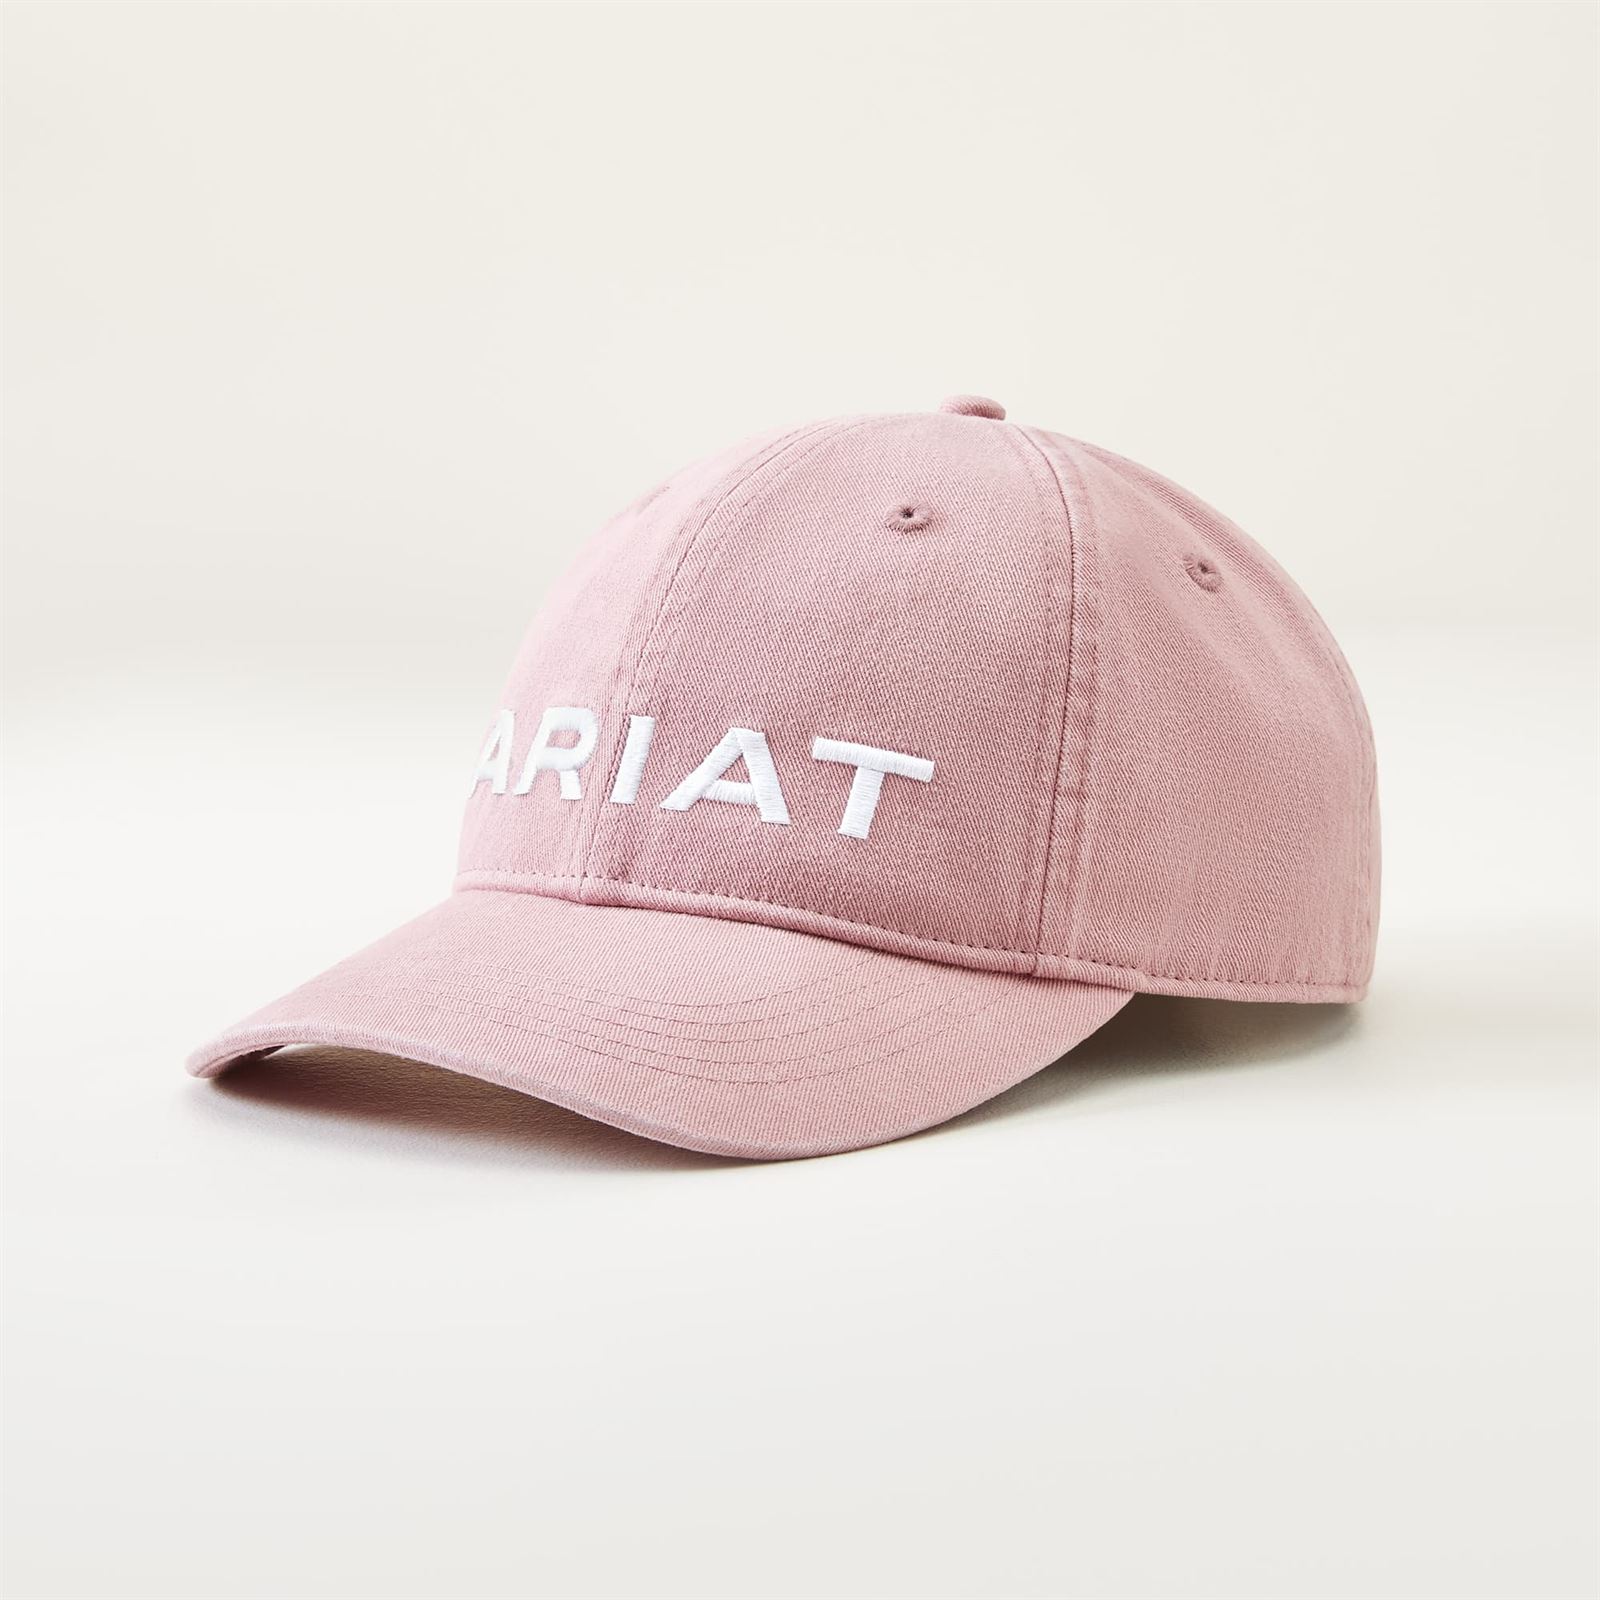 Gorra visera ARIAT Team III cap color rosa regulable talla única - Imagen 1